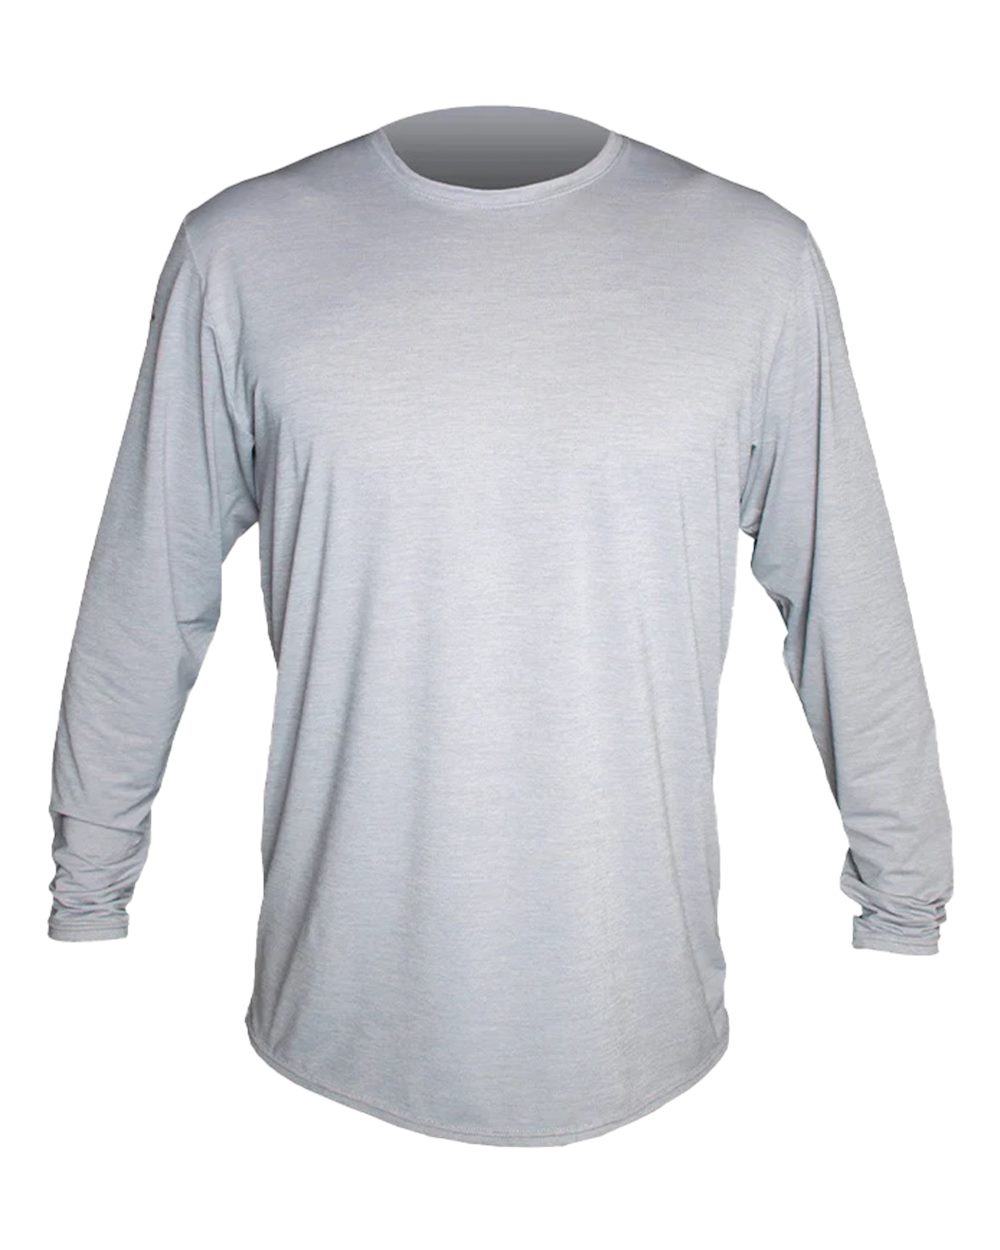 Anetik MLPRL8 - Low Pro Tech Long Sleeve T-Shirt